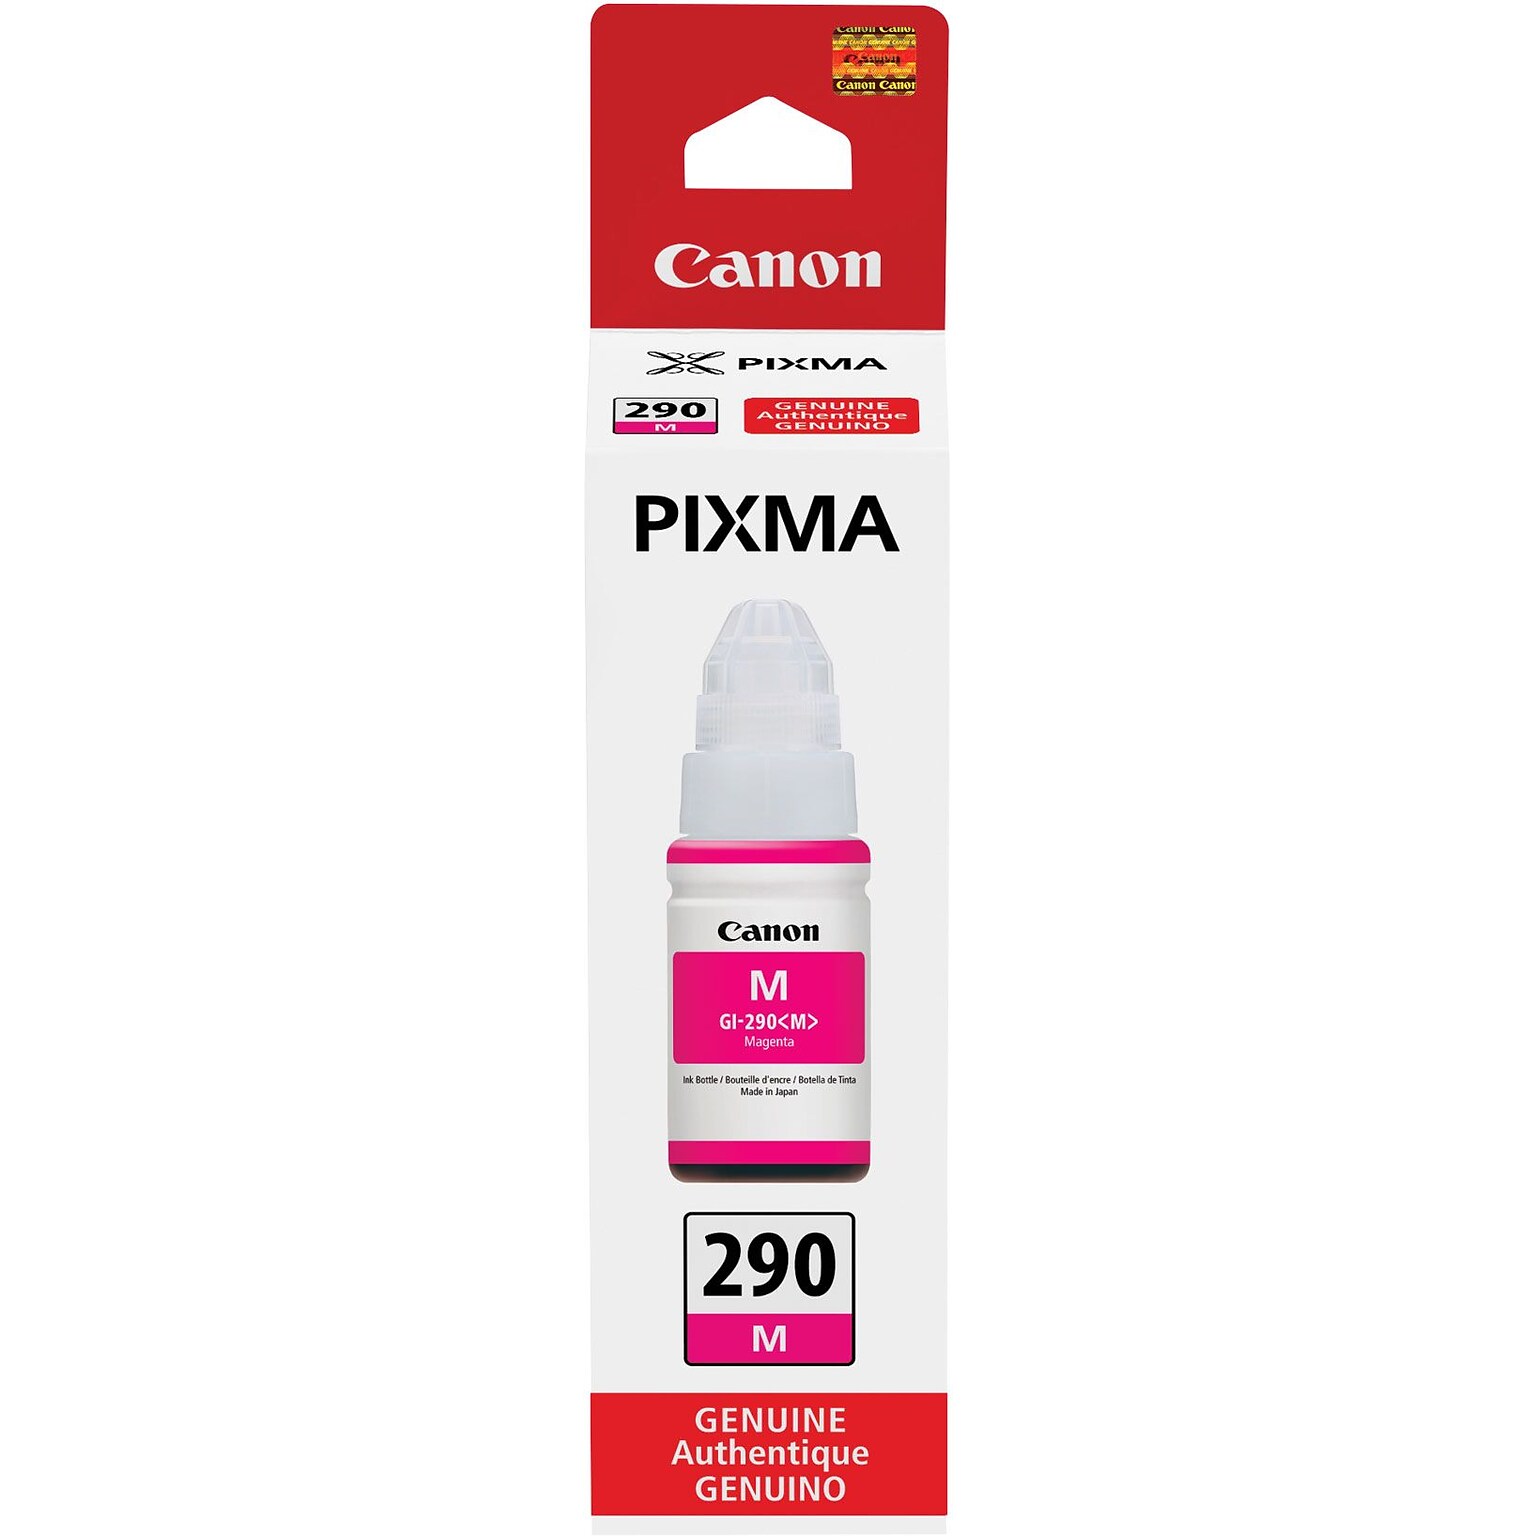 Canon 290 Magenta Standard Yield Ink Bottle (1597C001)